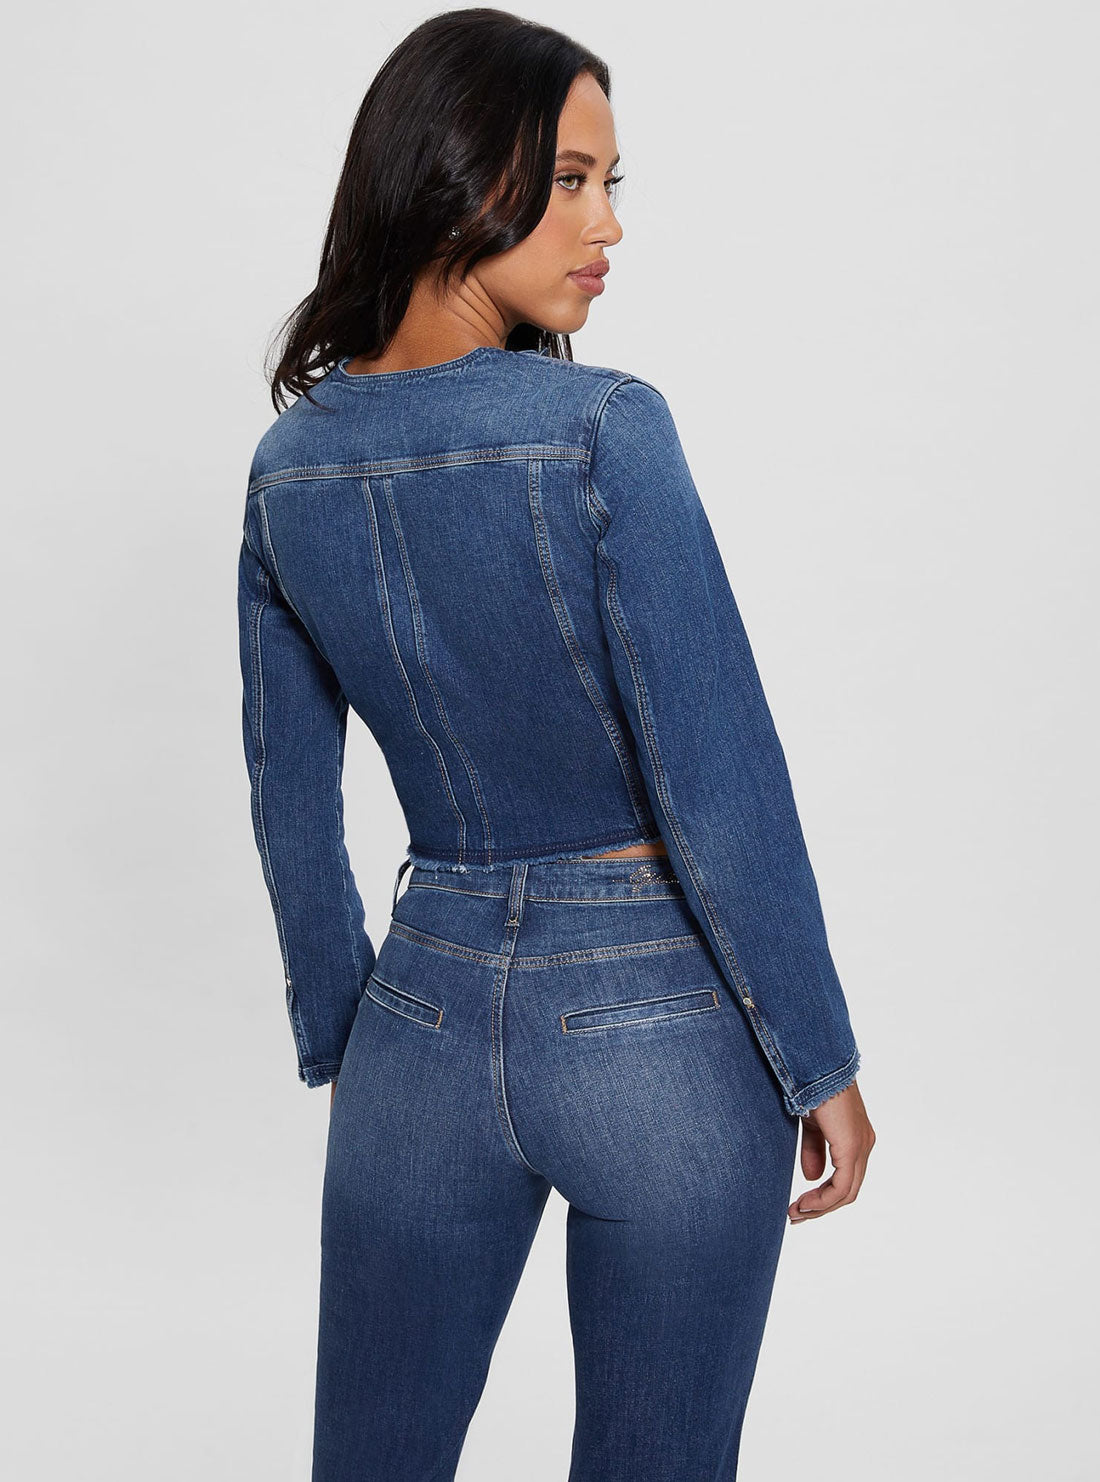 Eco Terrie Blue Denim Jacket | GUESS Women's Apparel | back view